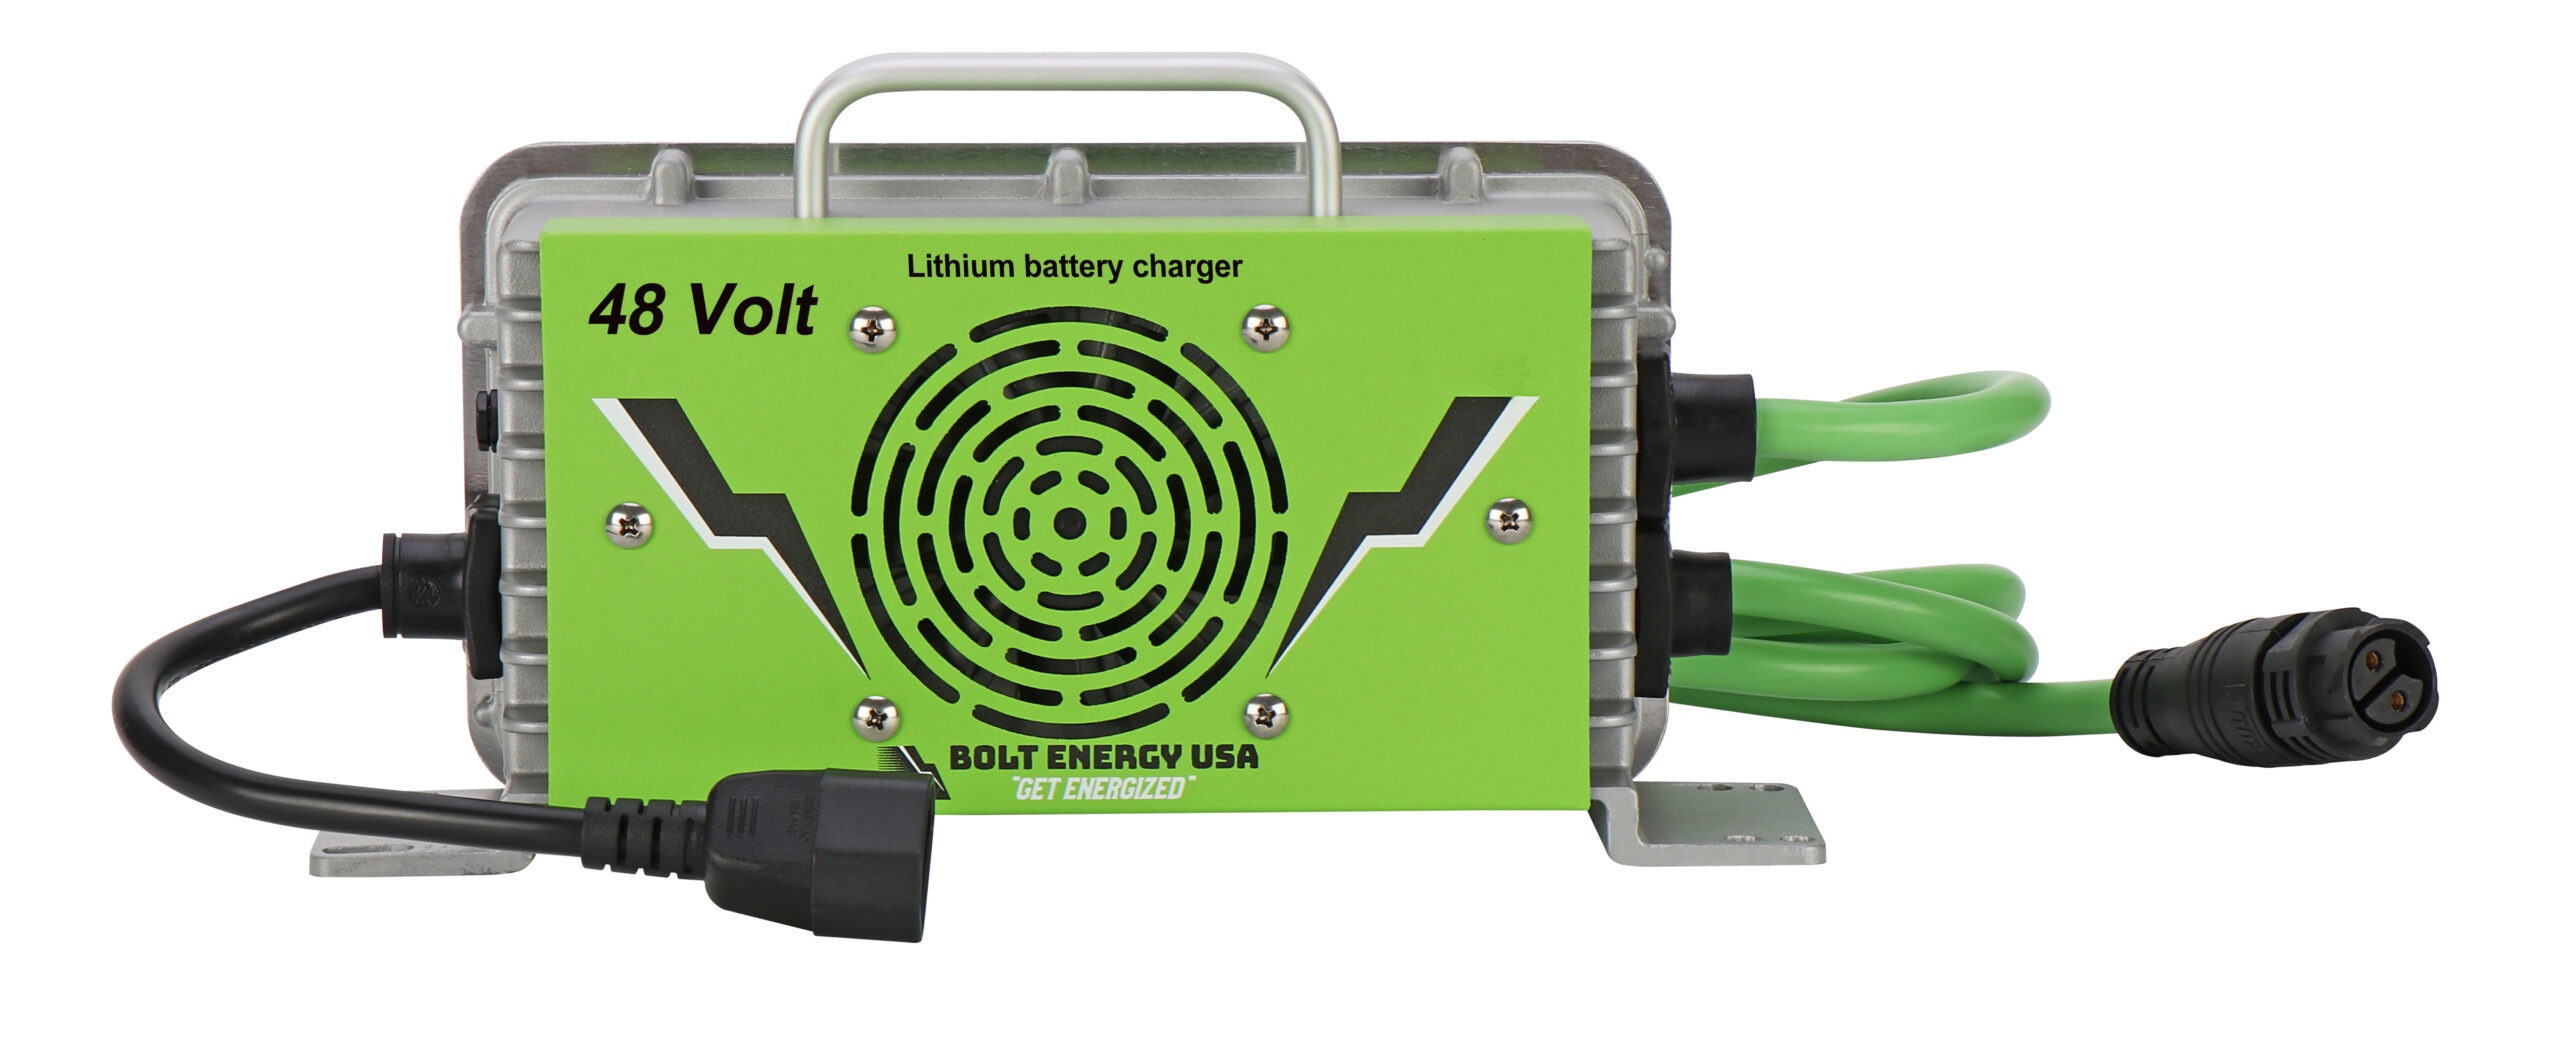 105AH 51 Volt Professional Kit BE10551M “MINI” HIGH OUTPUT GOLF CART LITHIUM  BATTERIES - Bolt Energy USA